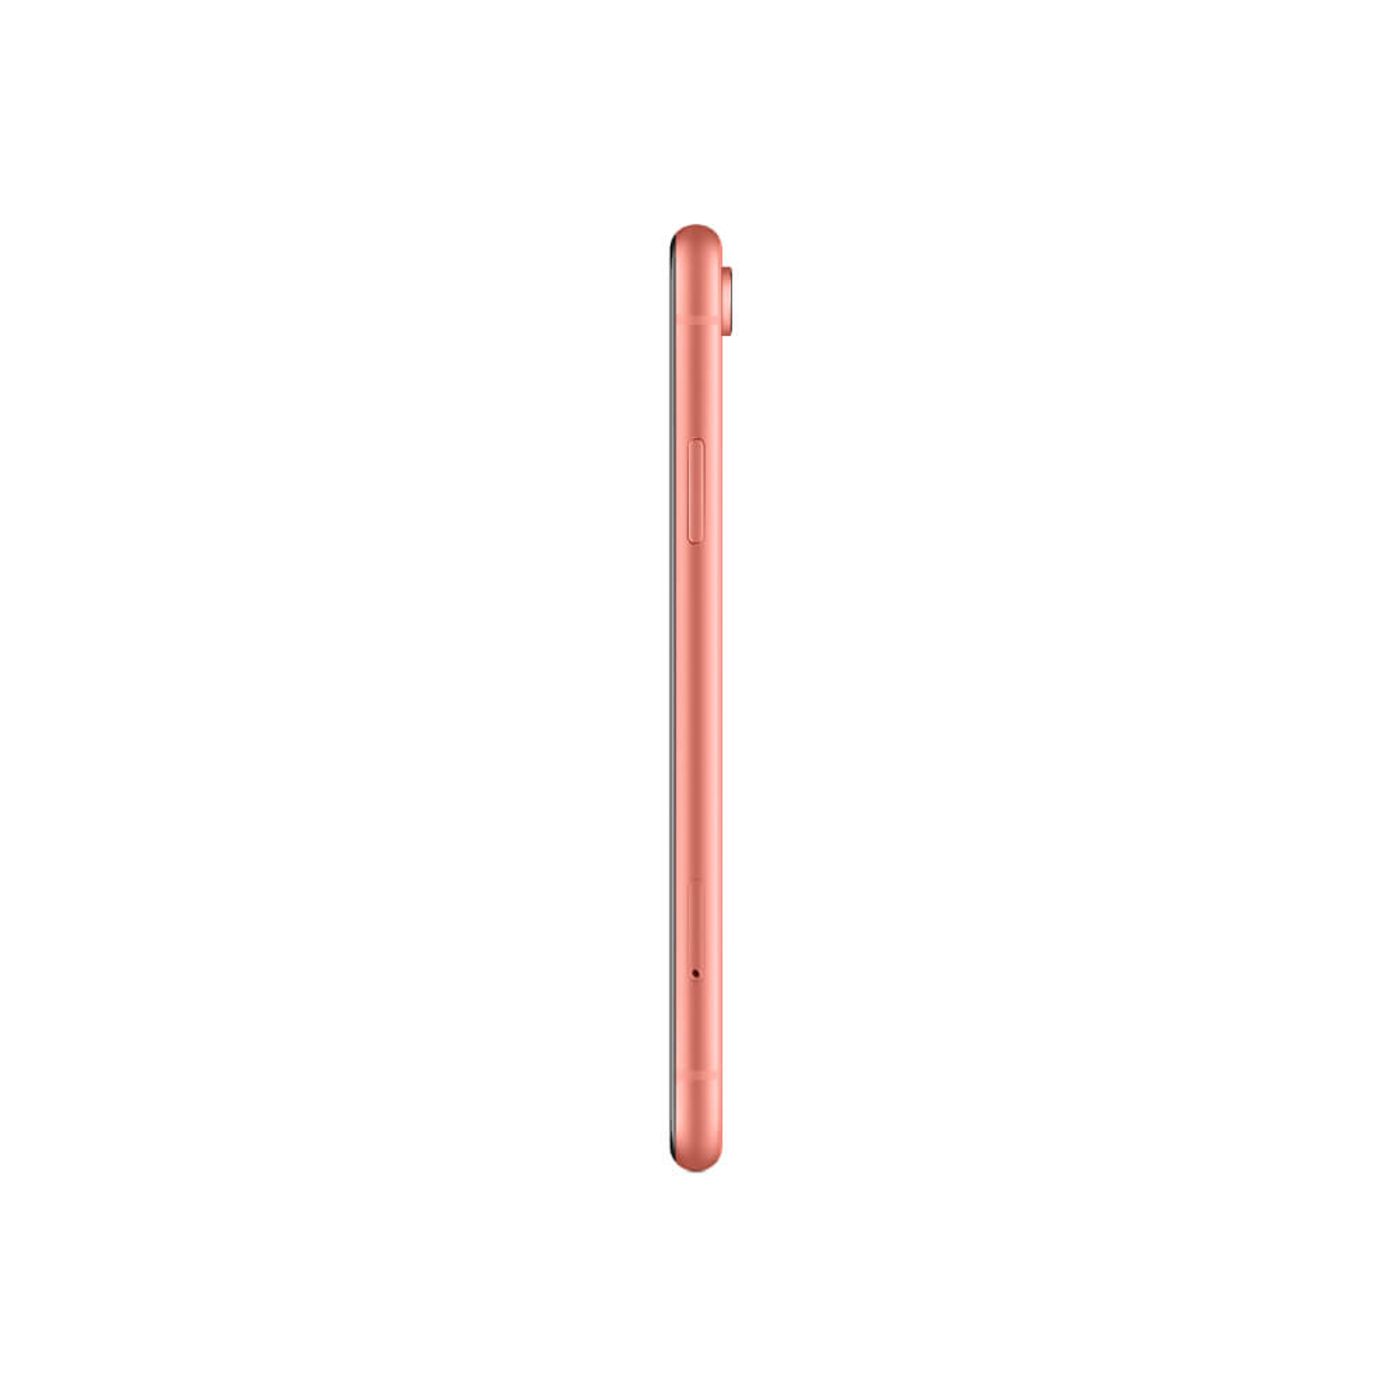 iPhone XR 128GB "Rosado Coral